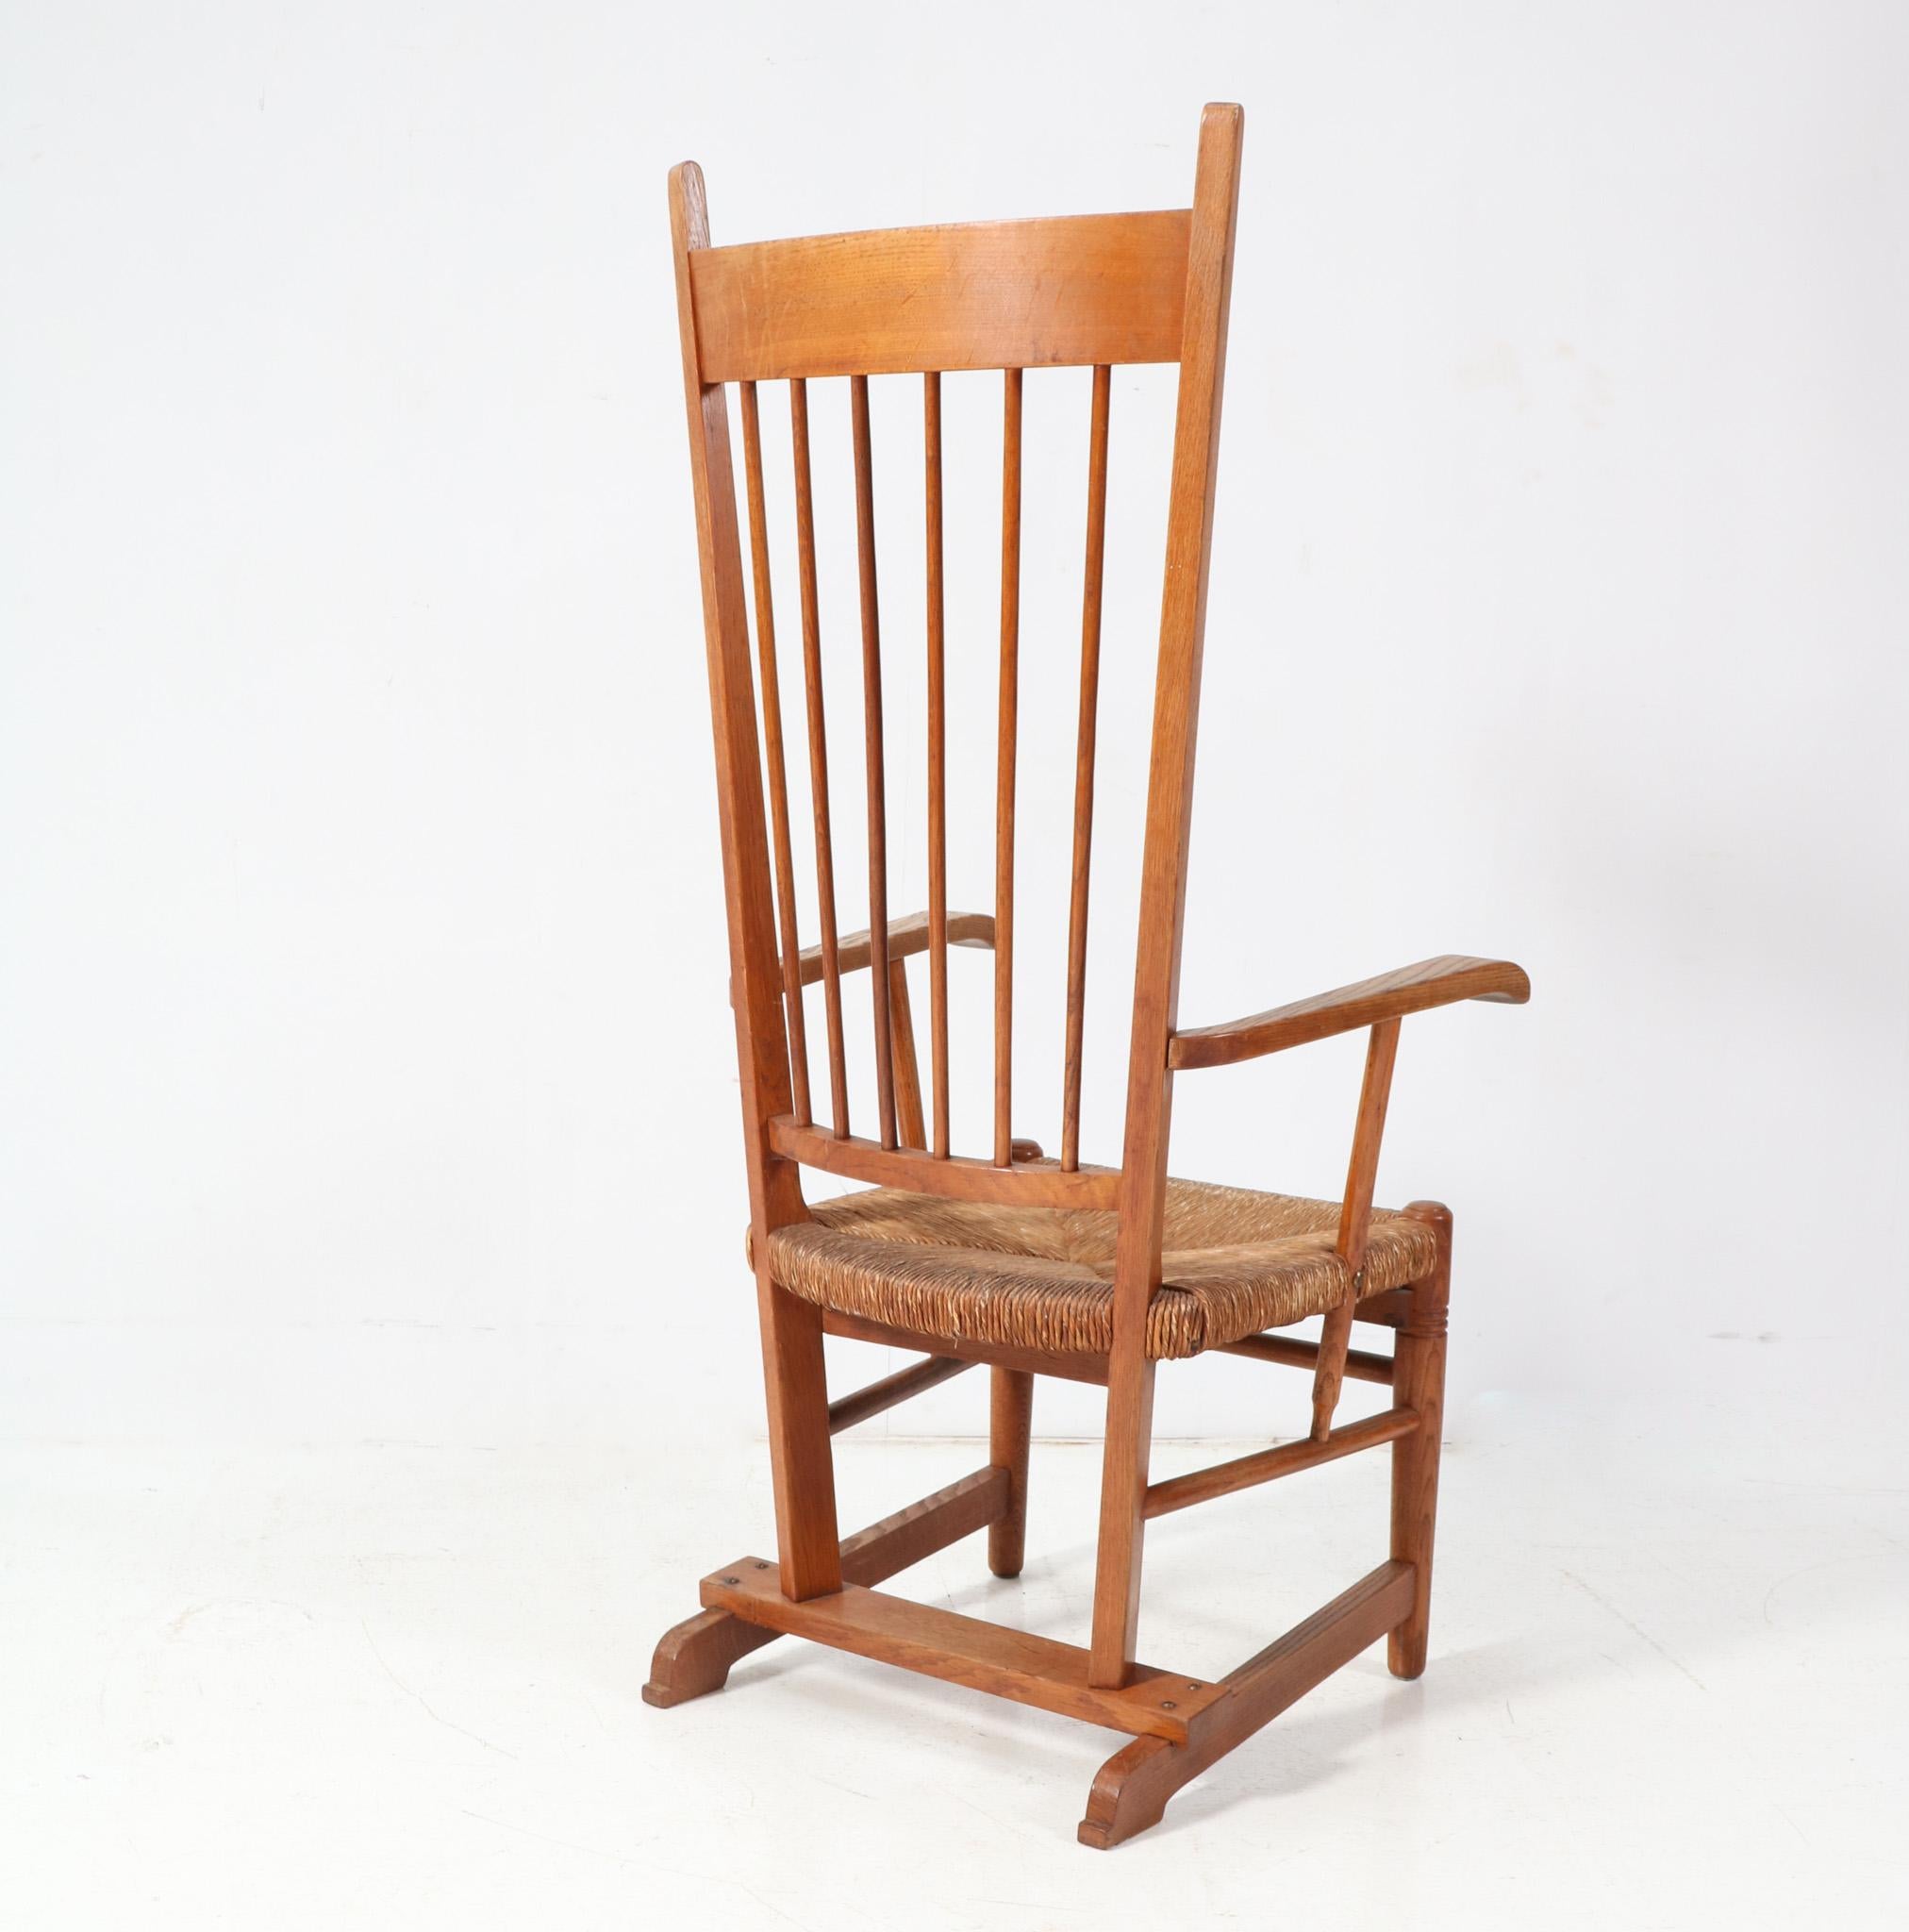 Oak Arts & Crafts Art Nouveau High Back Armchair with Rush Seat, 1900s For Sale 2